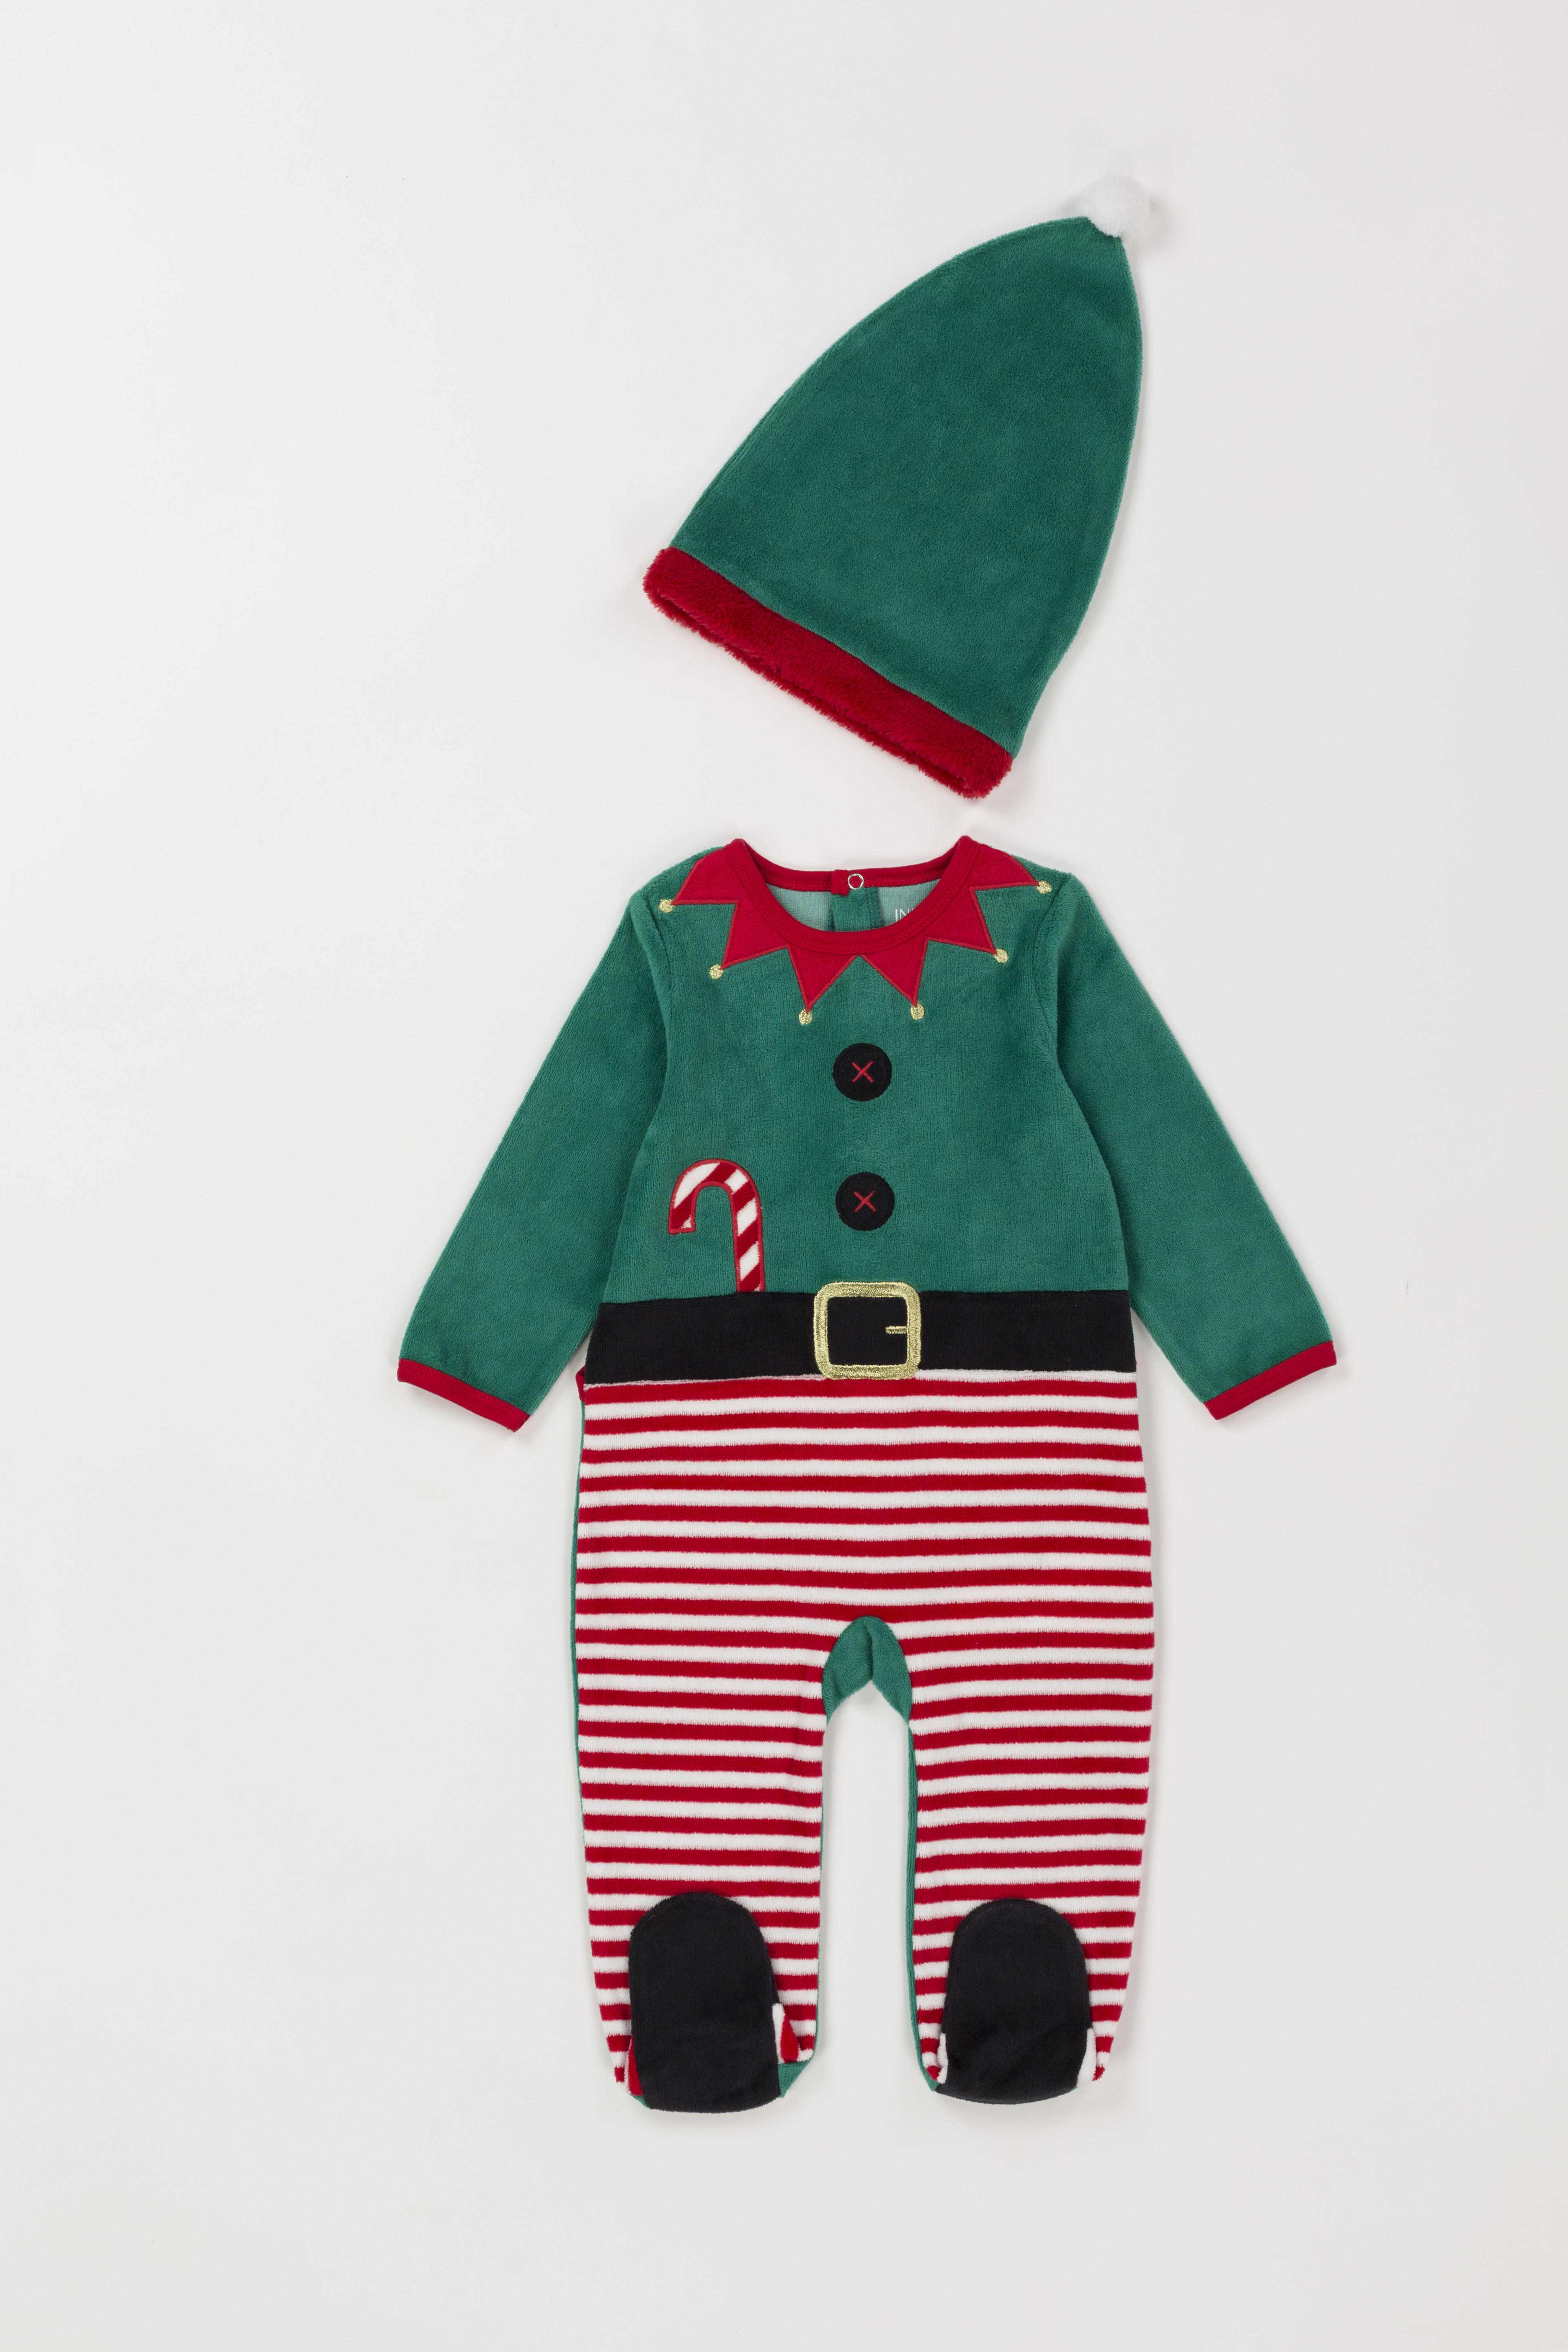 Pyjama lutin de Noël - Auchan baby - 3 mois